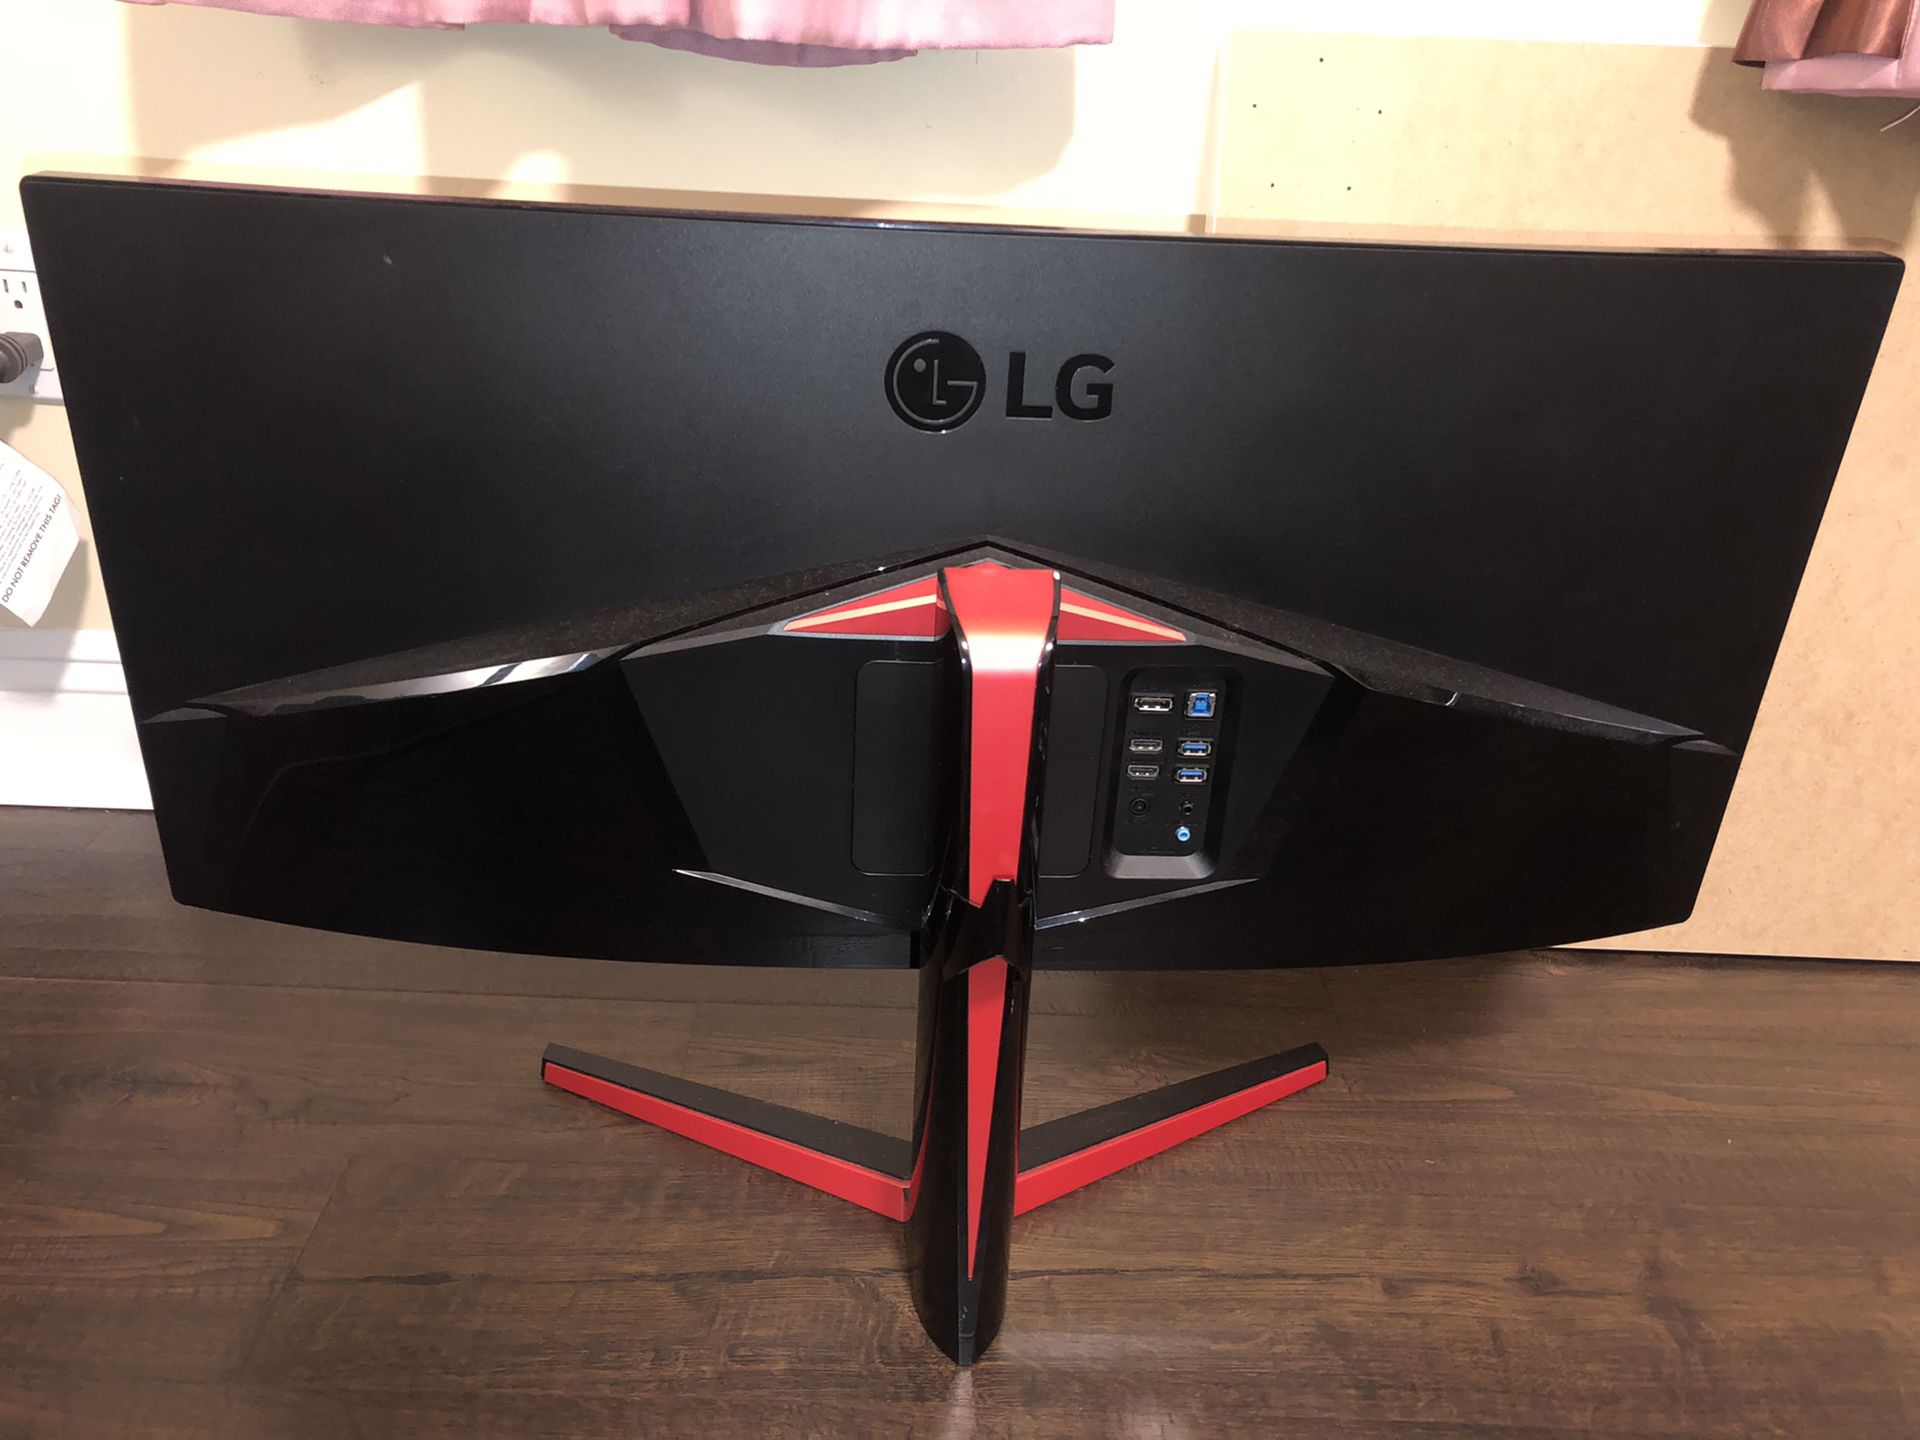 LG 34UC79G-B LG 34-Inch 21:9 Curved UltraWide IPS Gaming Monitor with 144Hz Refresh Rate, Black LG 34UC79G-B LG 34-Inch 21:9 Curved UltraWide IPS Ga